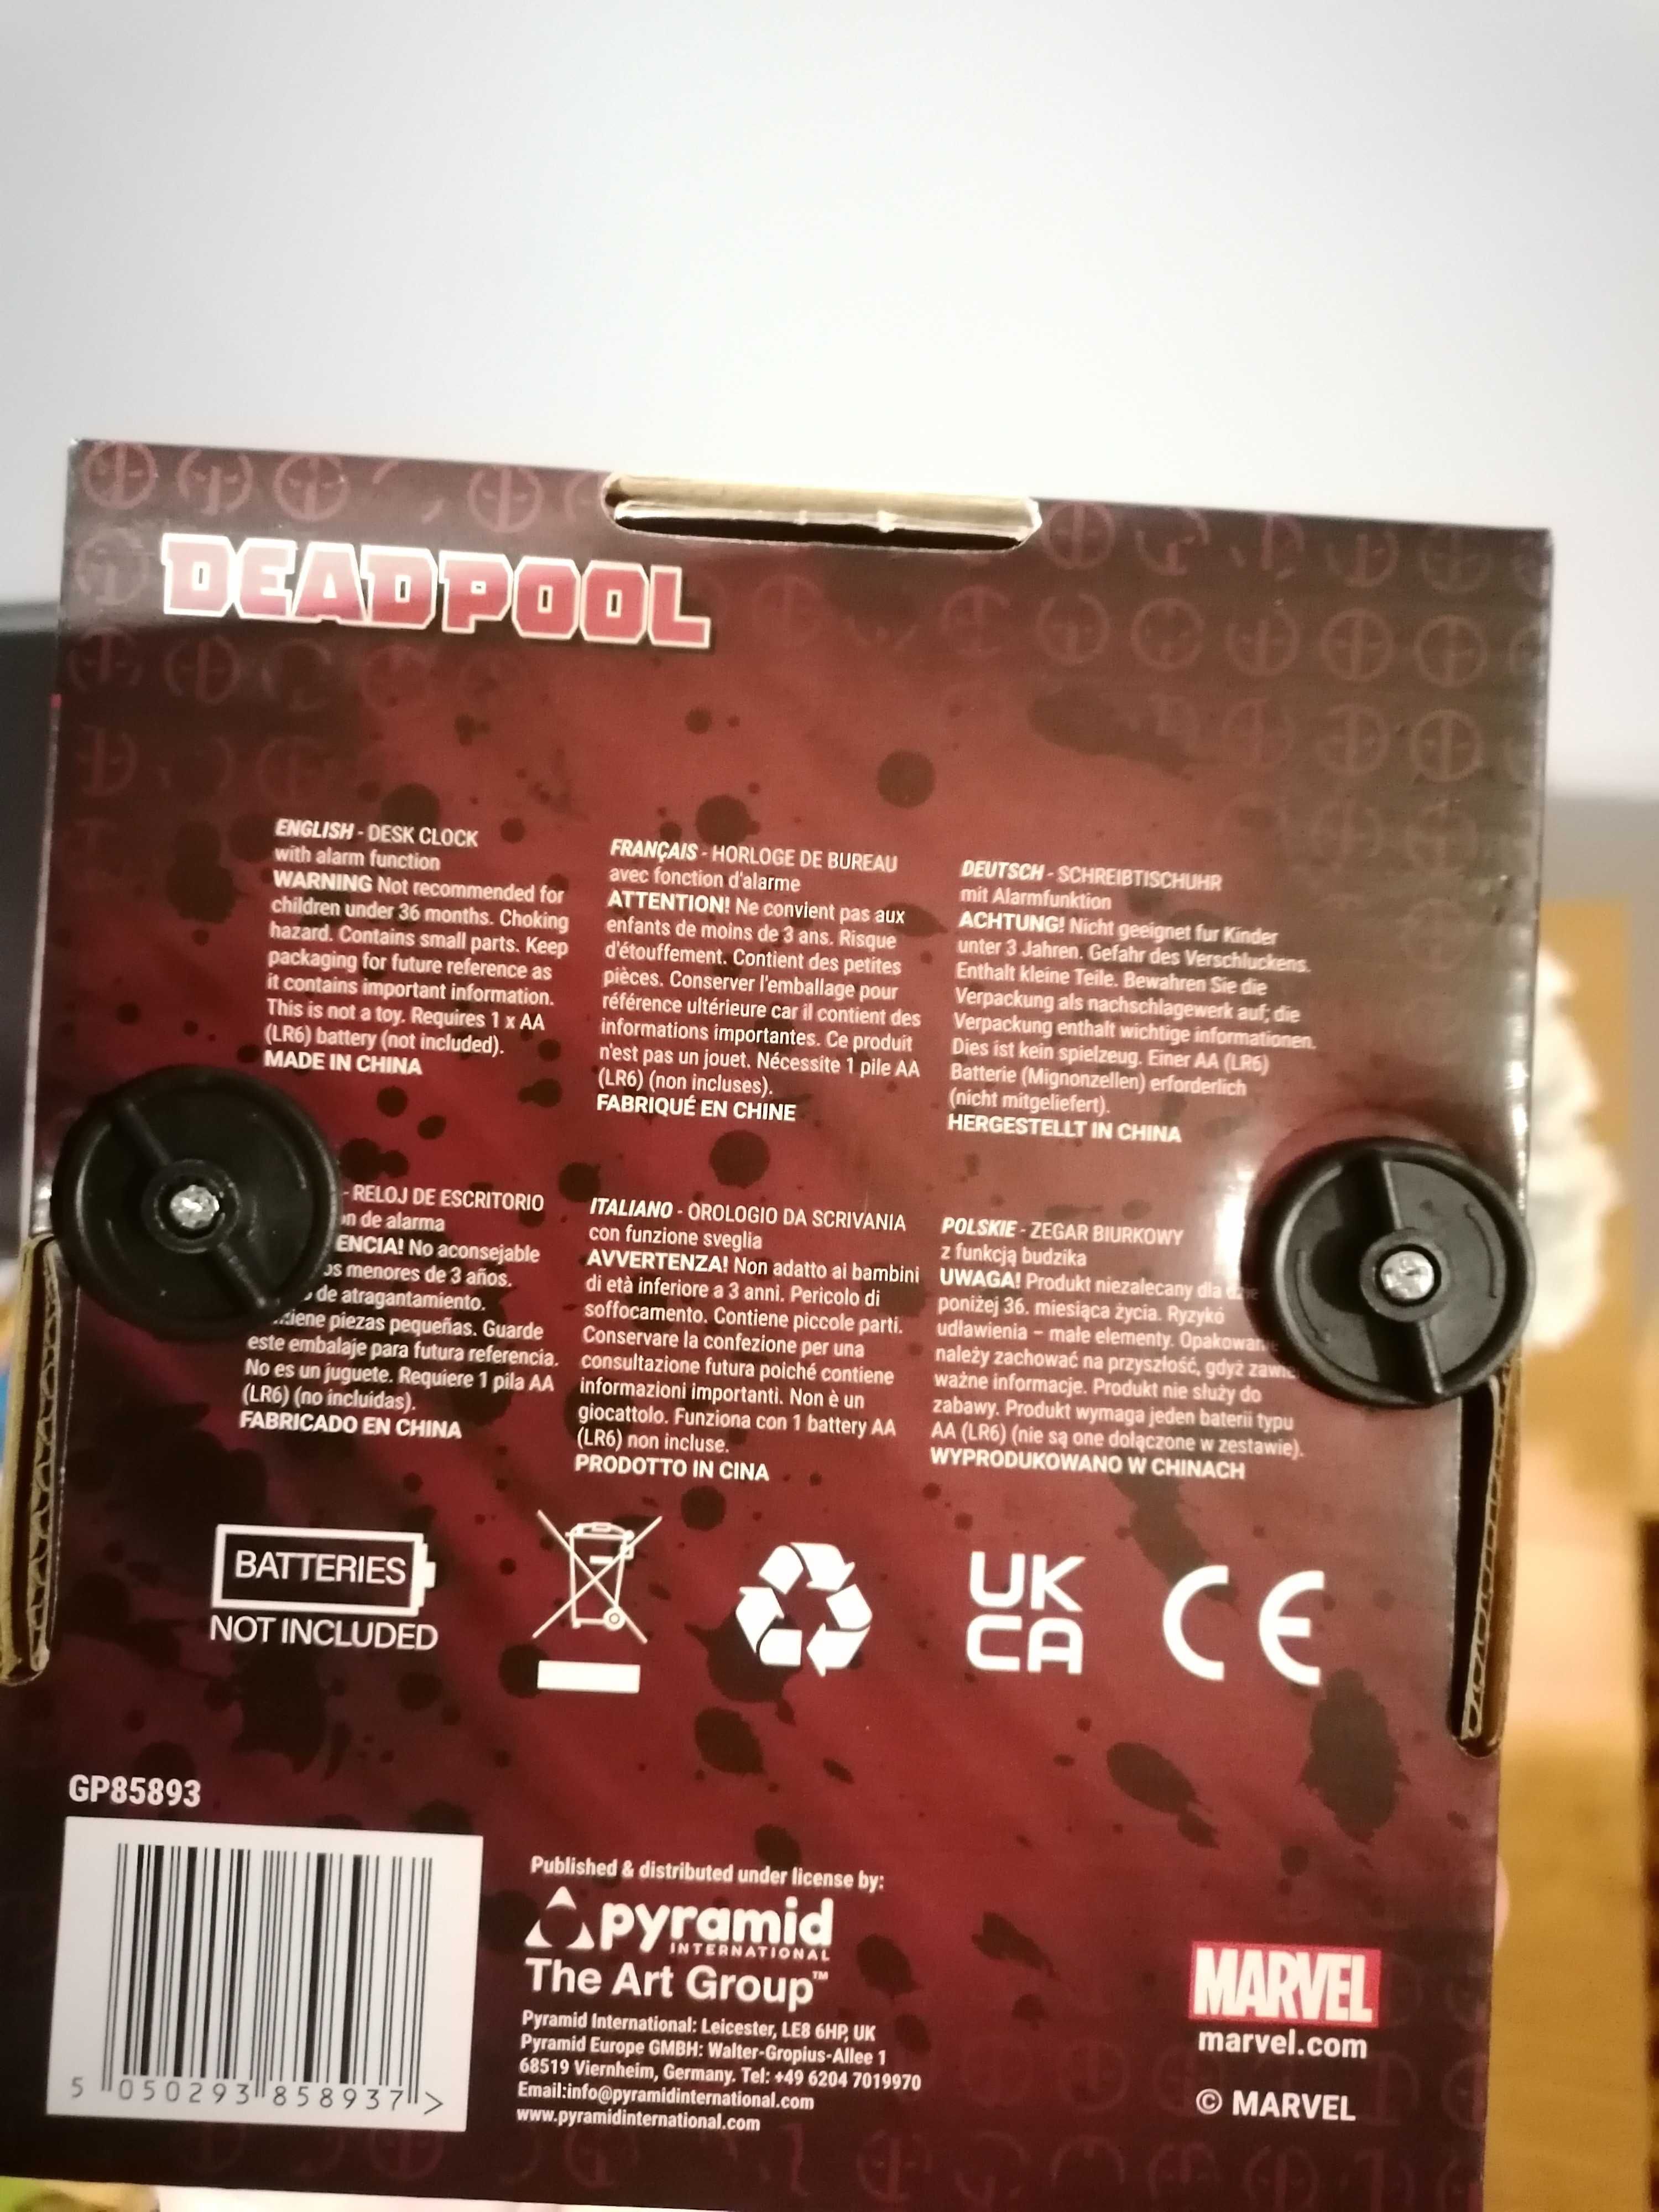 Zegar Deadpool Nowy w pudełku